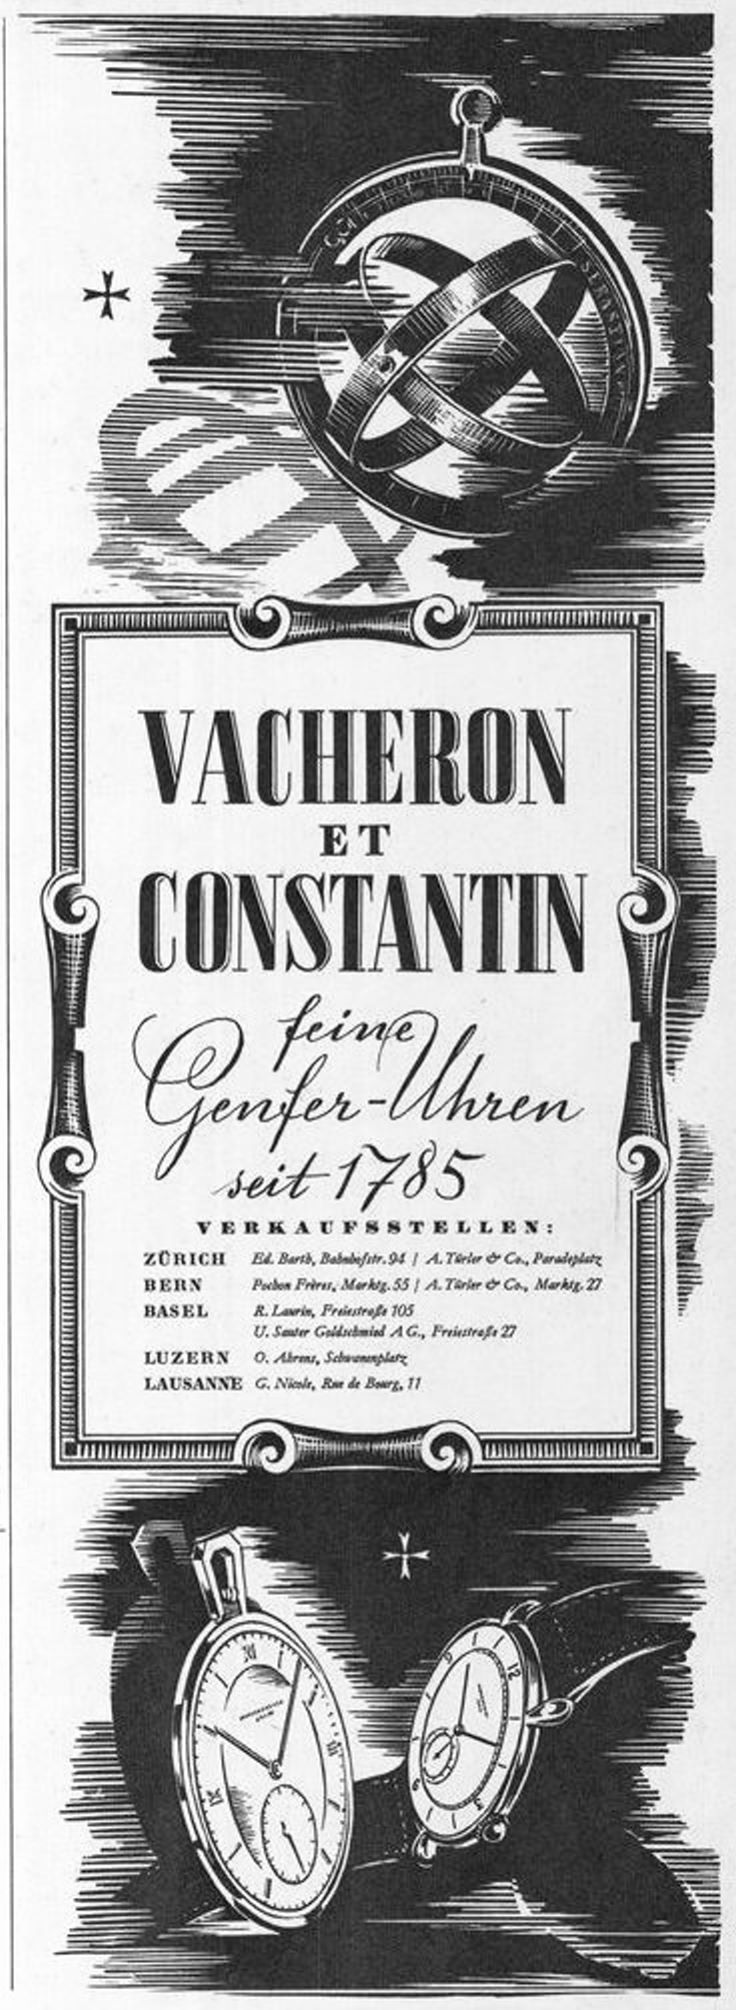 Vacheron & Constantin 1942 03.jpg